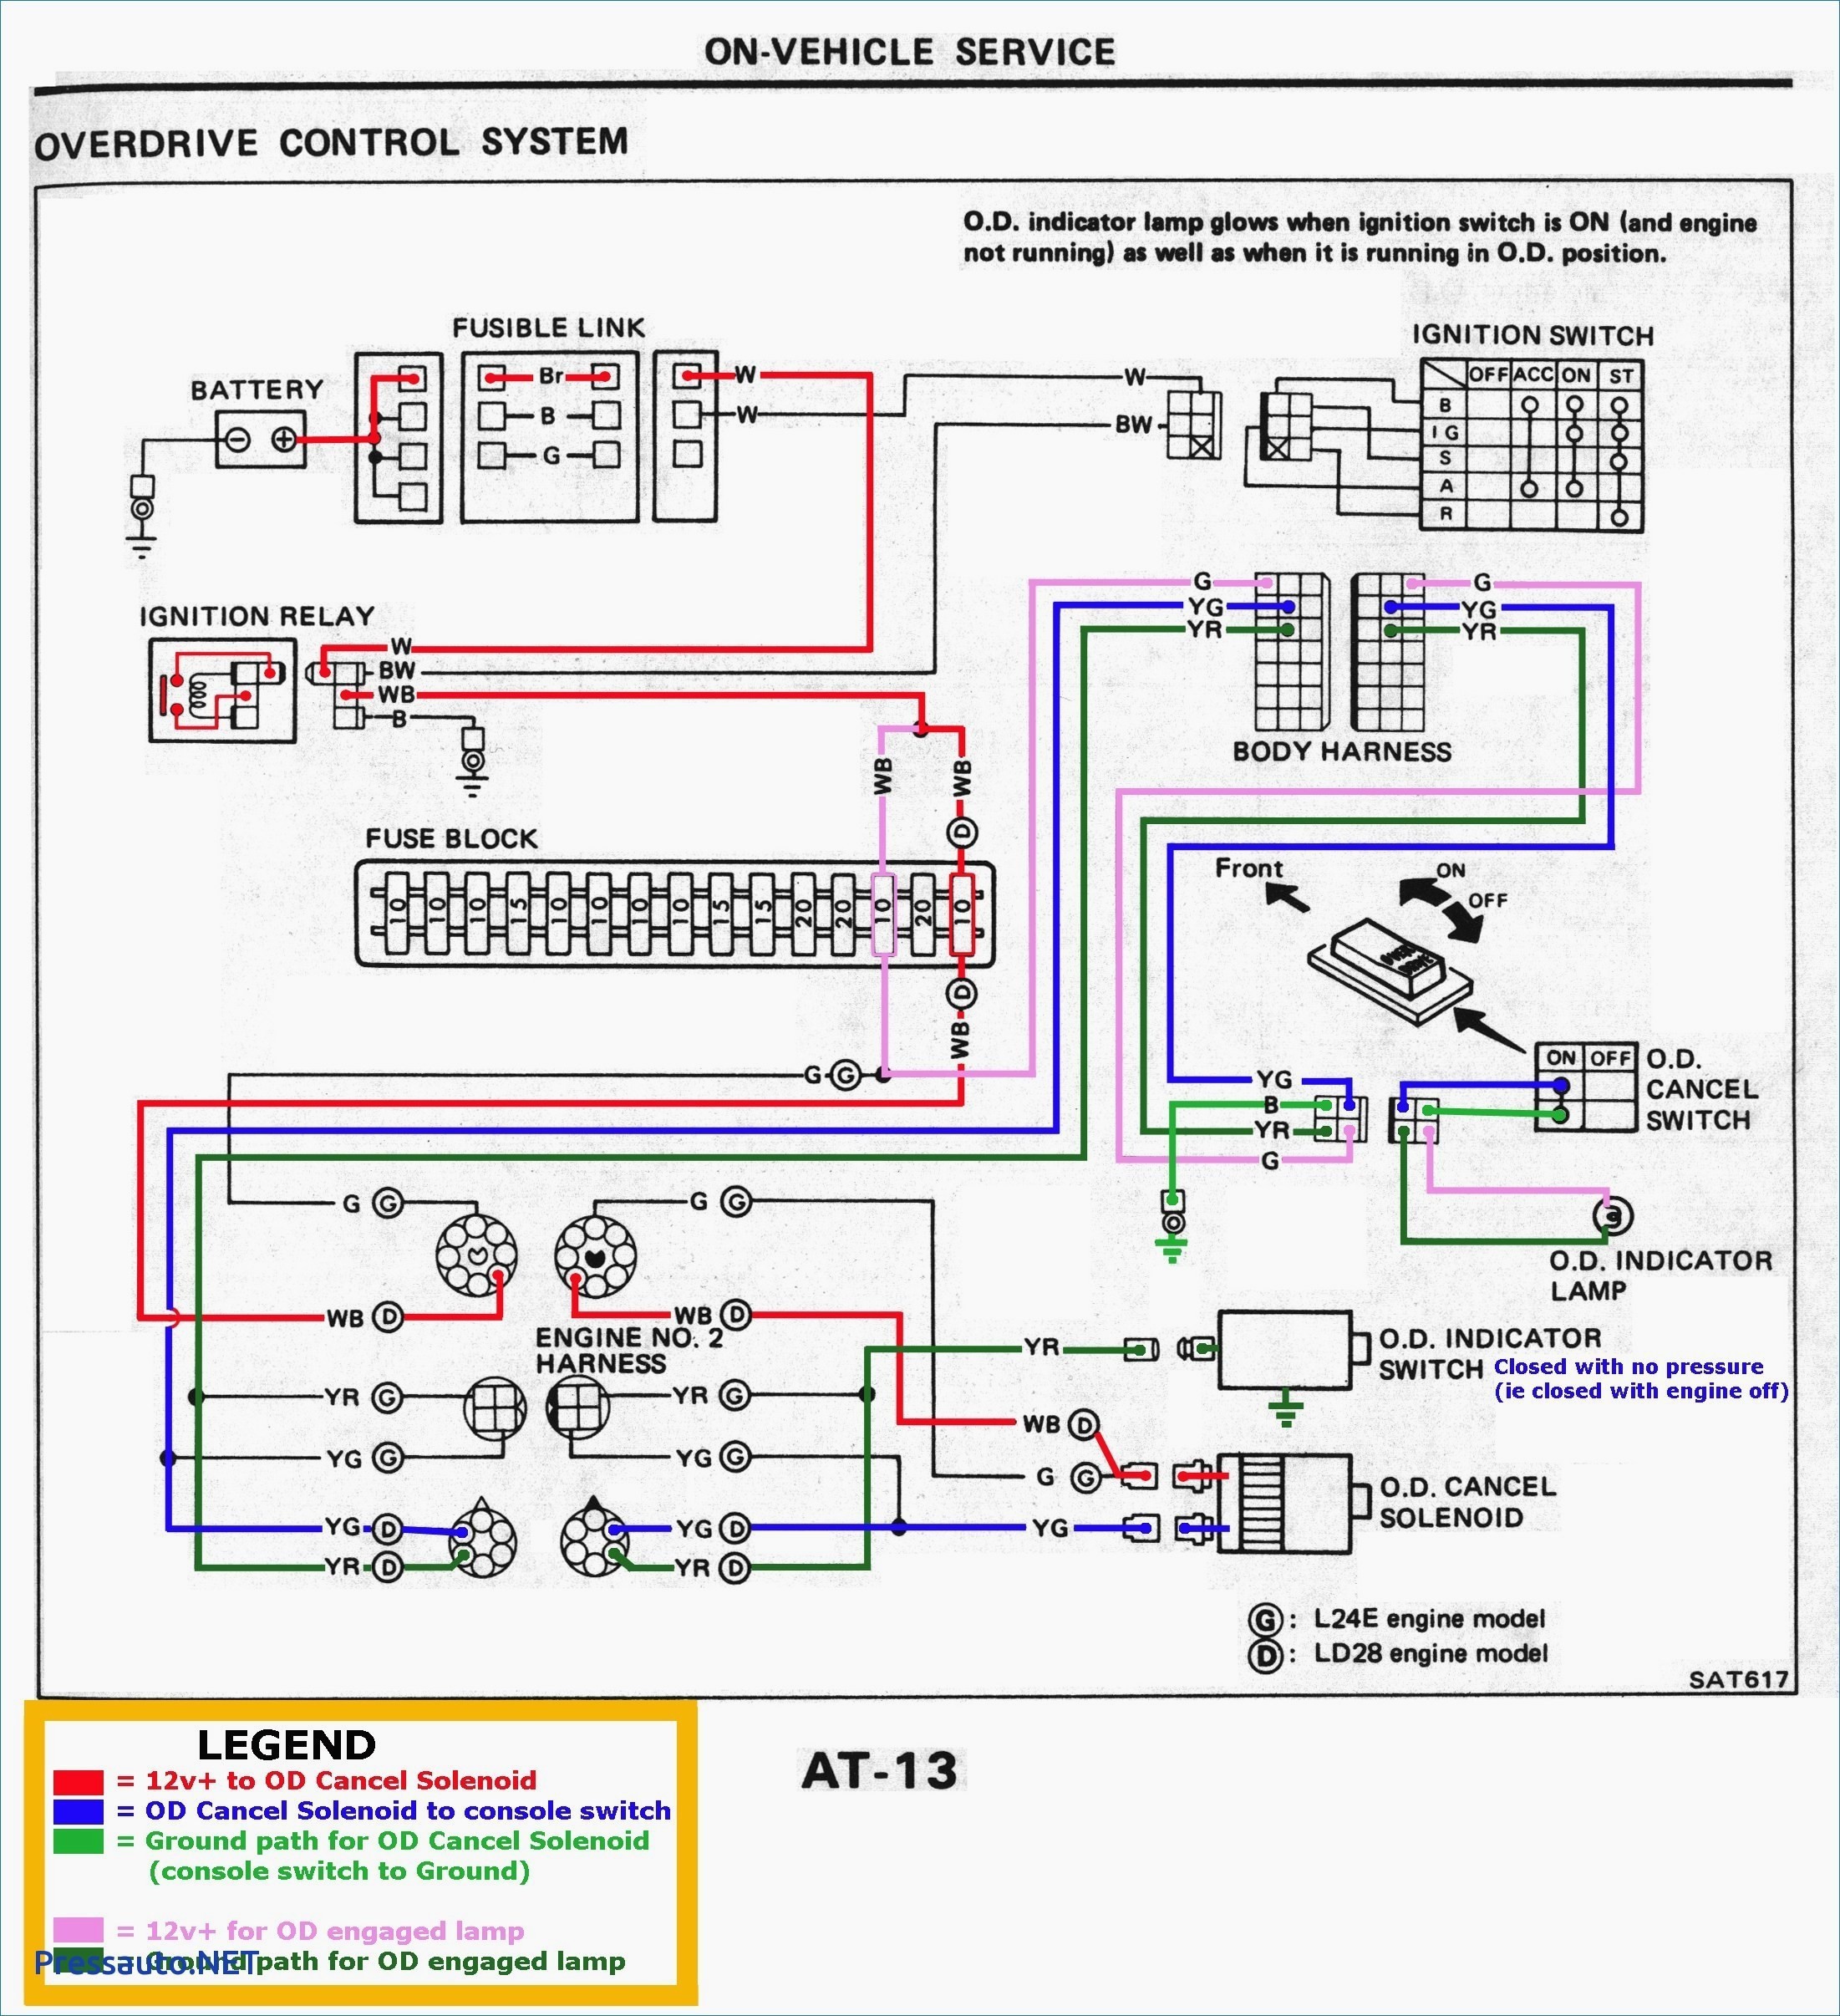 2006 Vw Passat Engine Diagram 2012 Vw Beetle Wiring Harness Trailer Wiring Diagram Datasource Of 2006 Vw Passat Engine Diagram